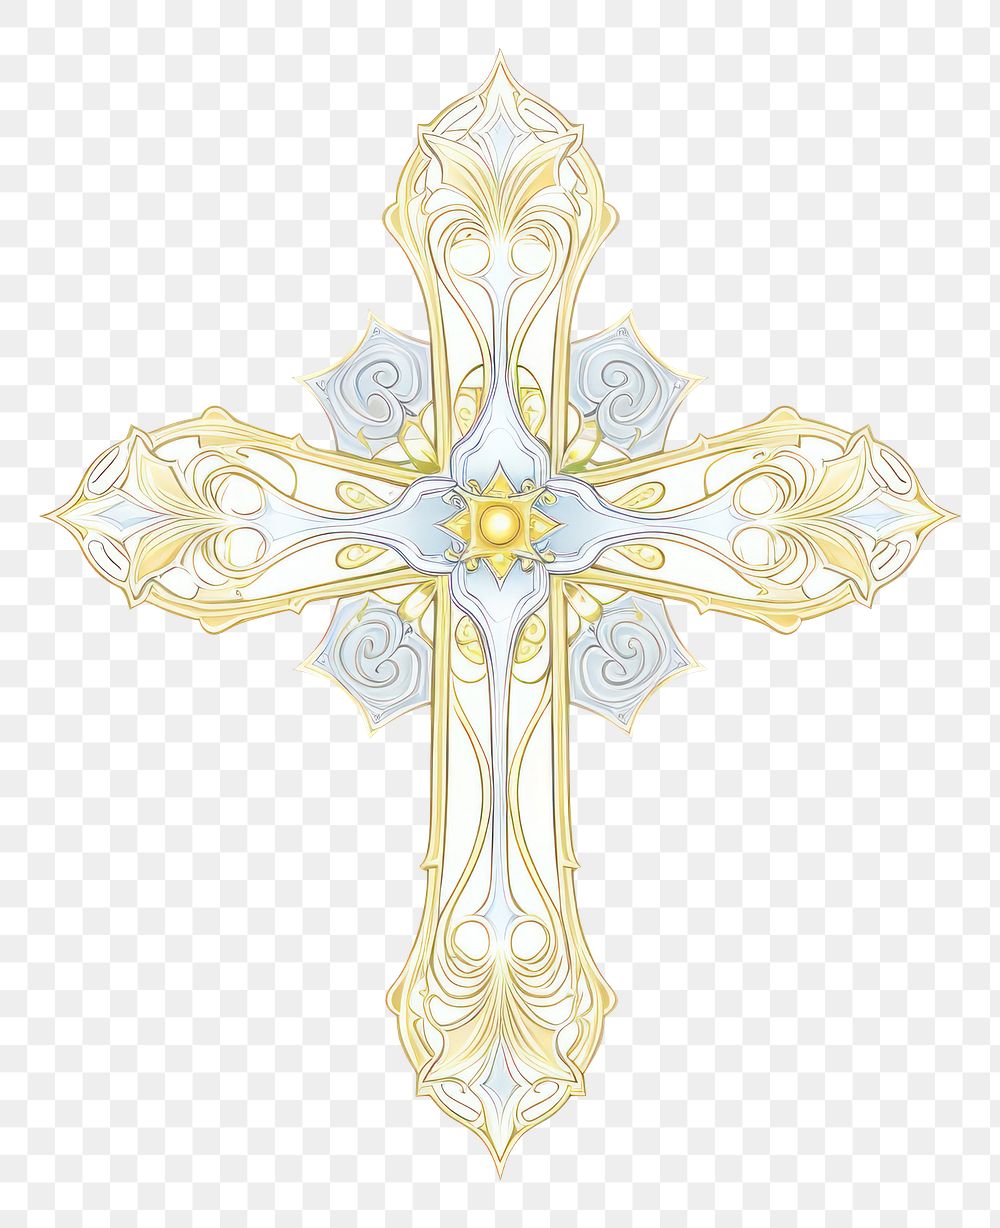 illustration of *jesus cross Alphonse Mucha style* isolated on white background --ar 3:2 --style 19pADPufIwHTB19